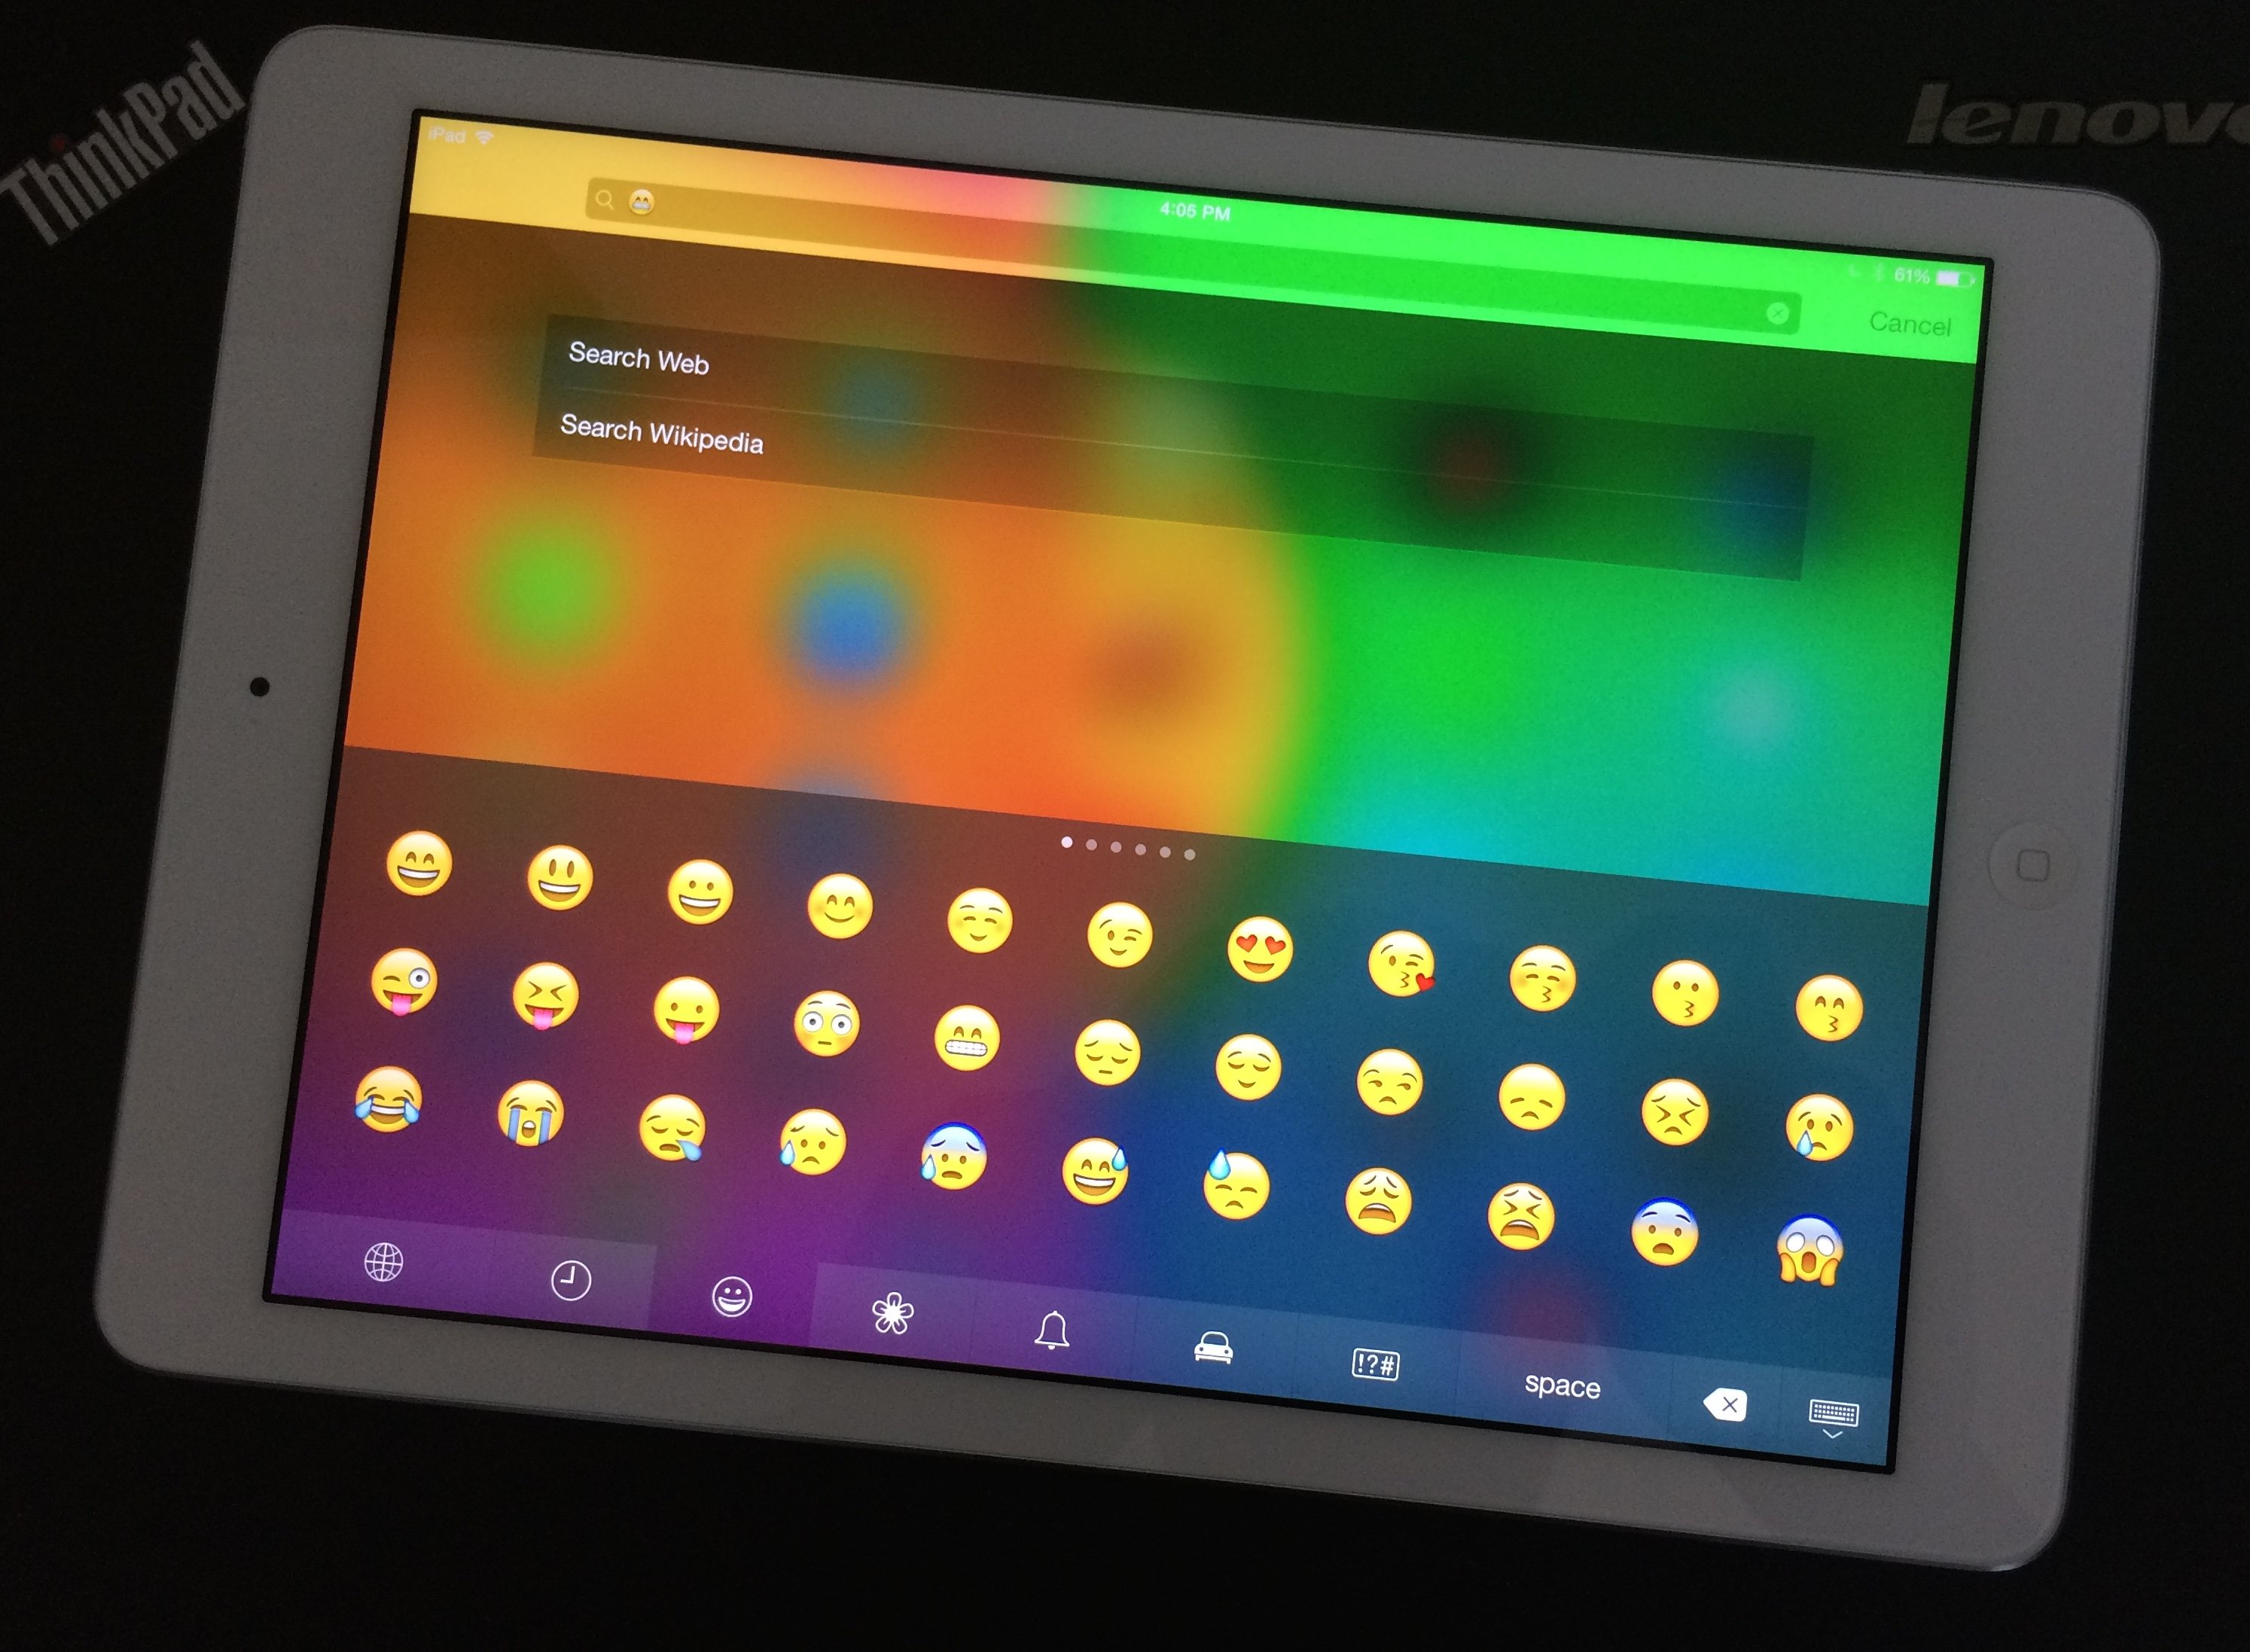 Learn how to use Emoji on iPad and iPad mini.